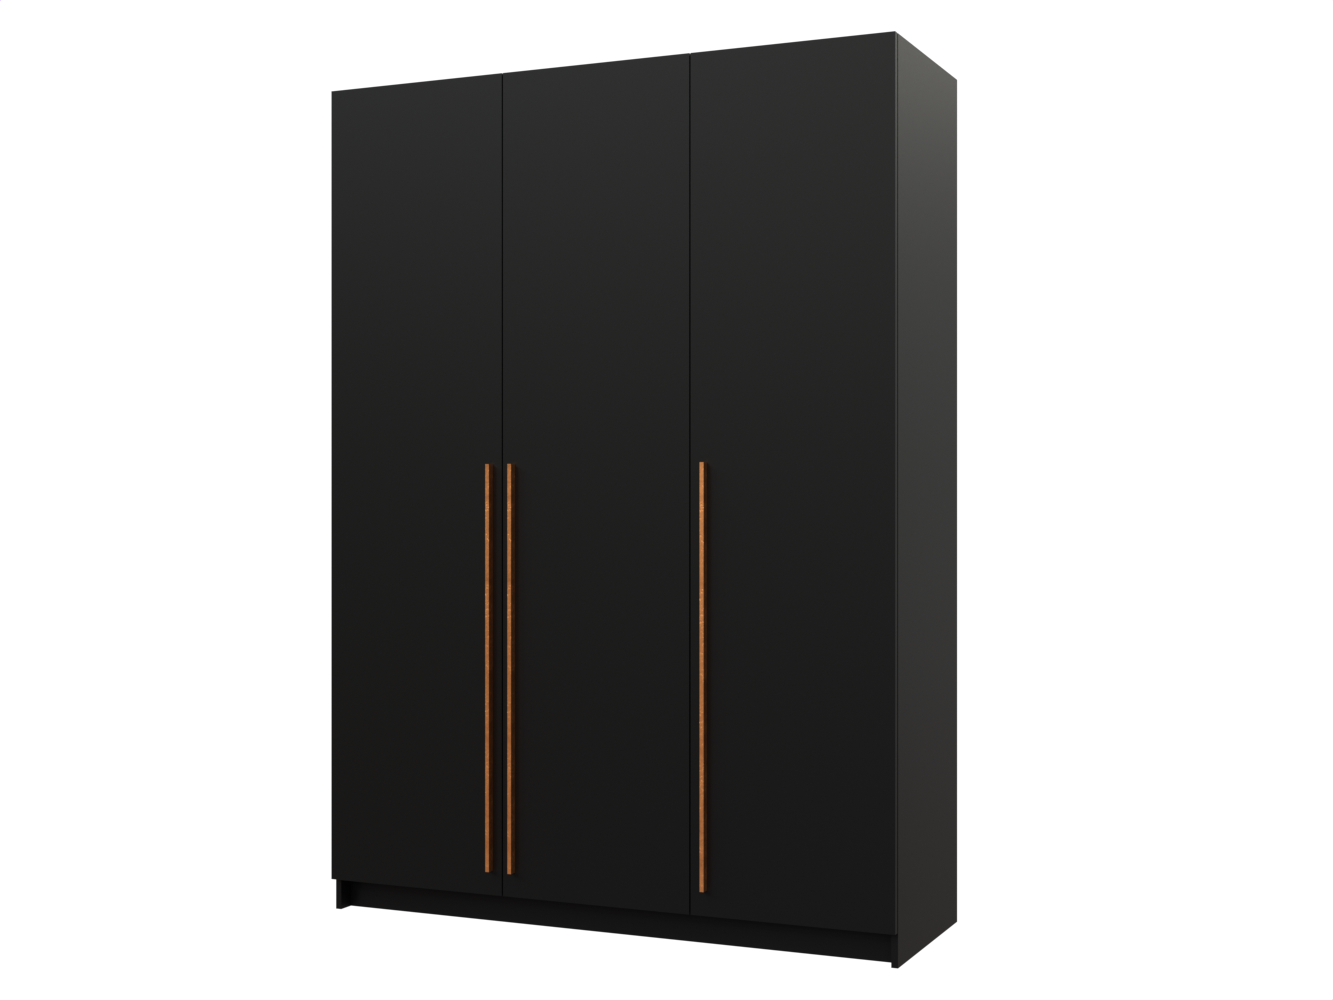 Распашной шкаф Пакс Фардал 59 black ИКЕА (IKEA) изображение товара